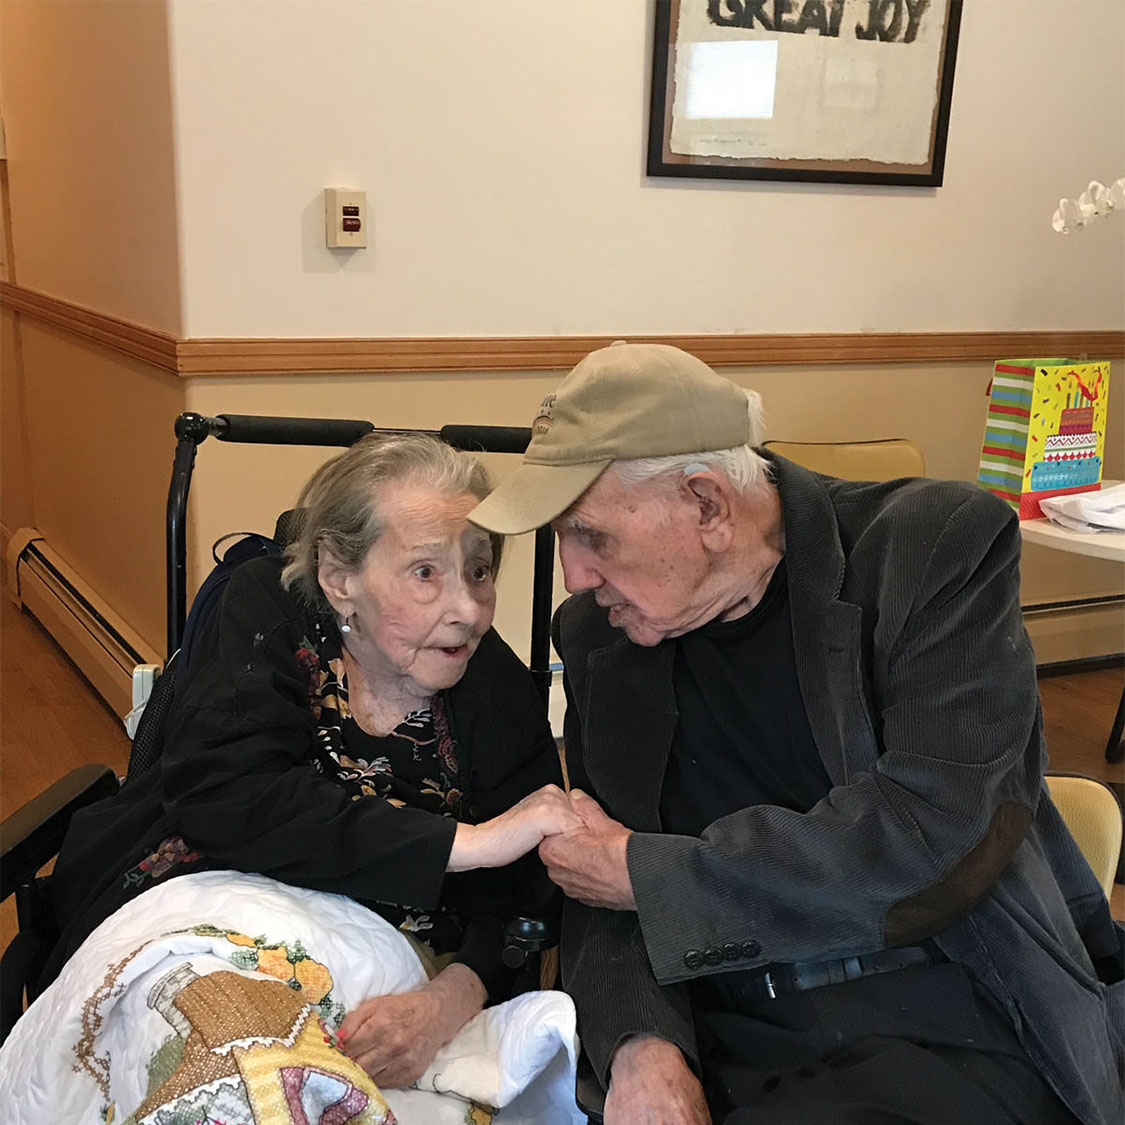 Elderly couple sitting together